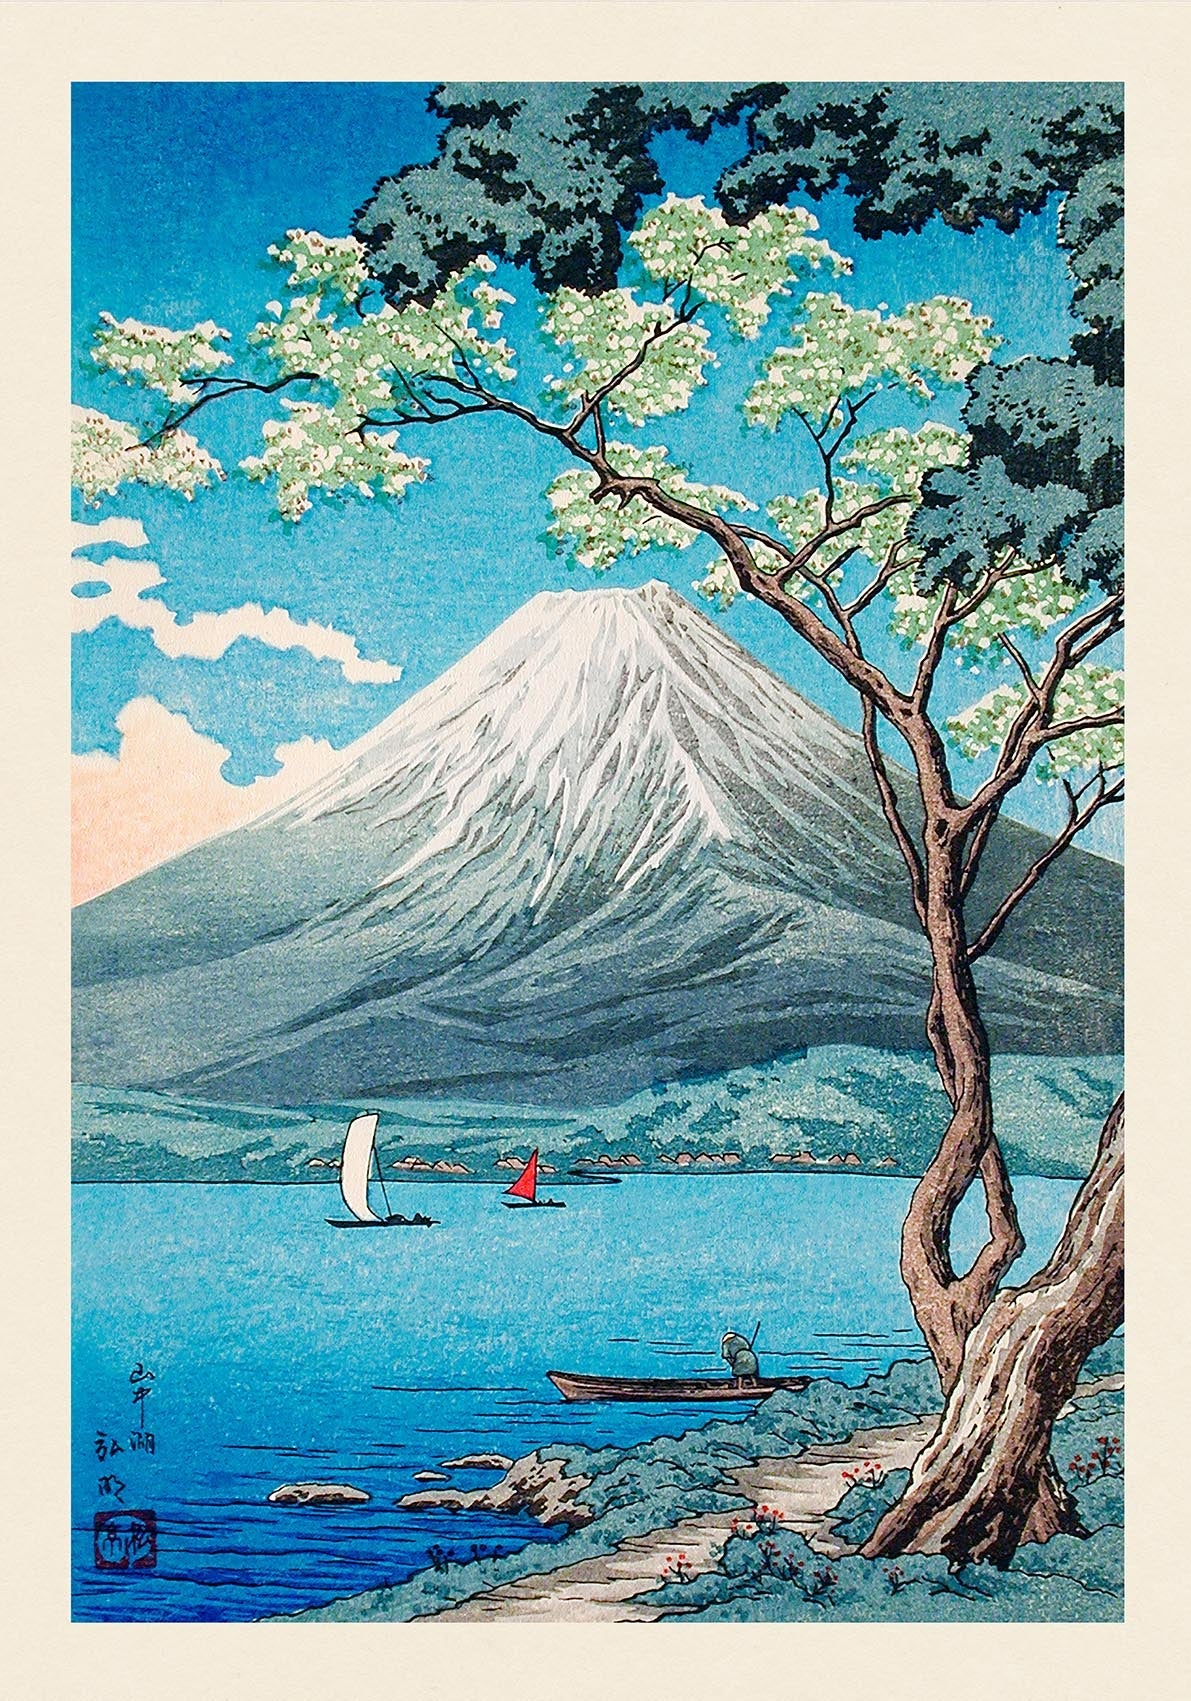 Mount Fuji from Lake Yamanaka by Takahashi Shōtei